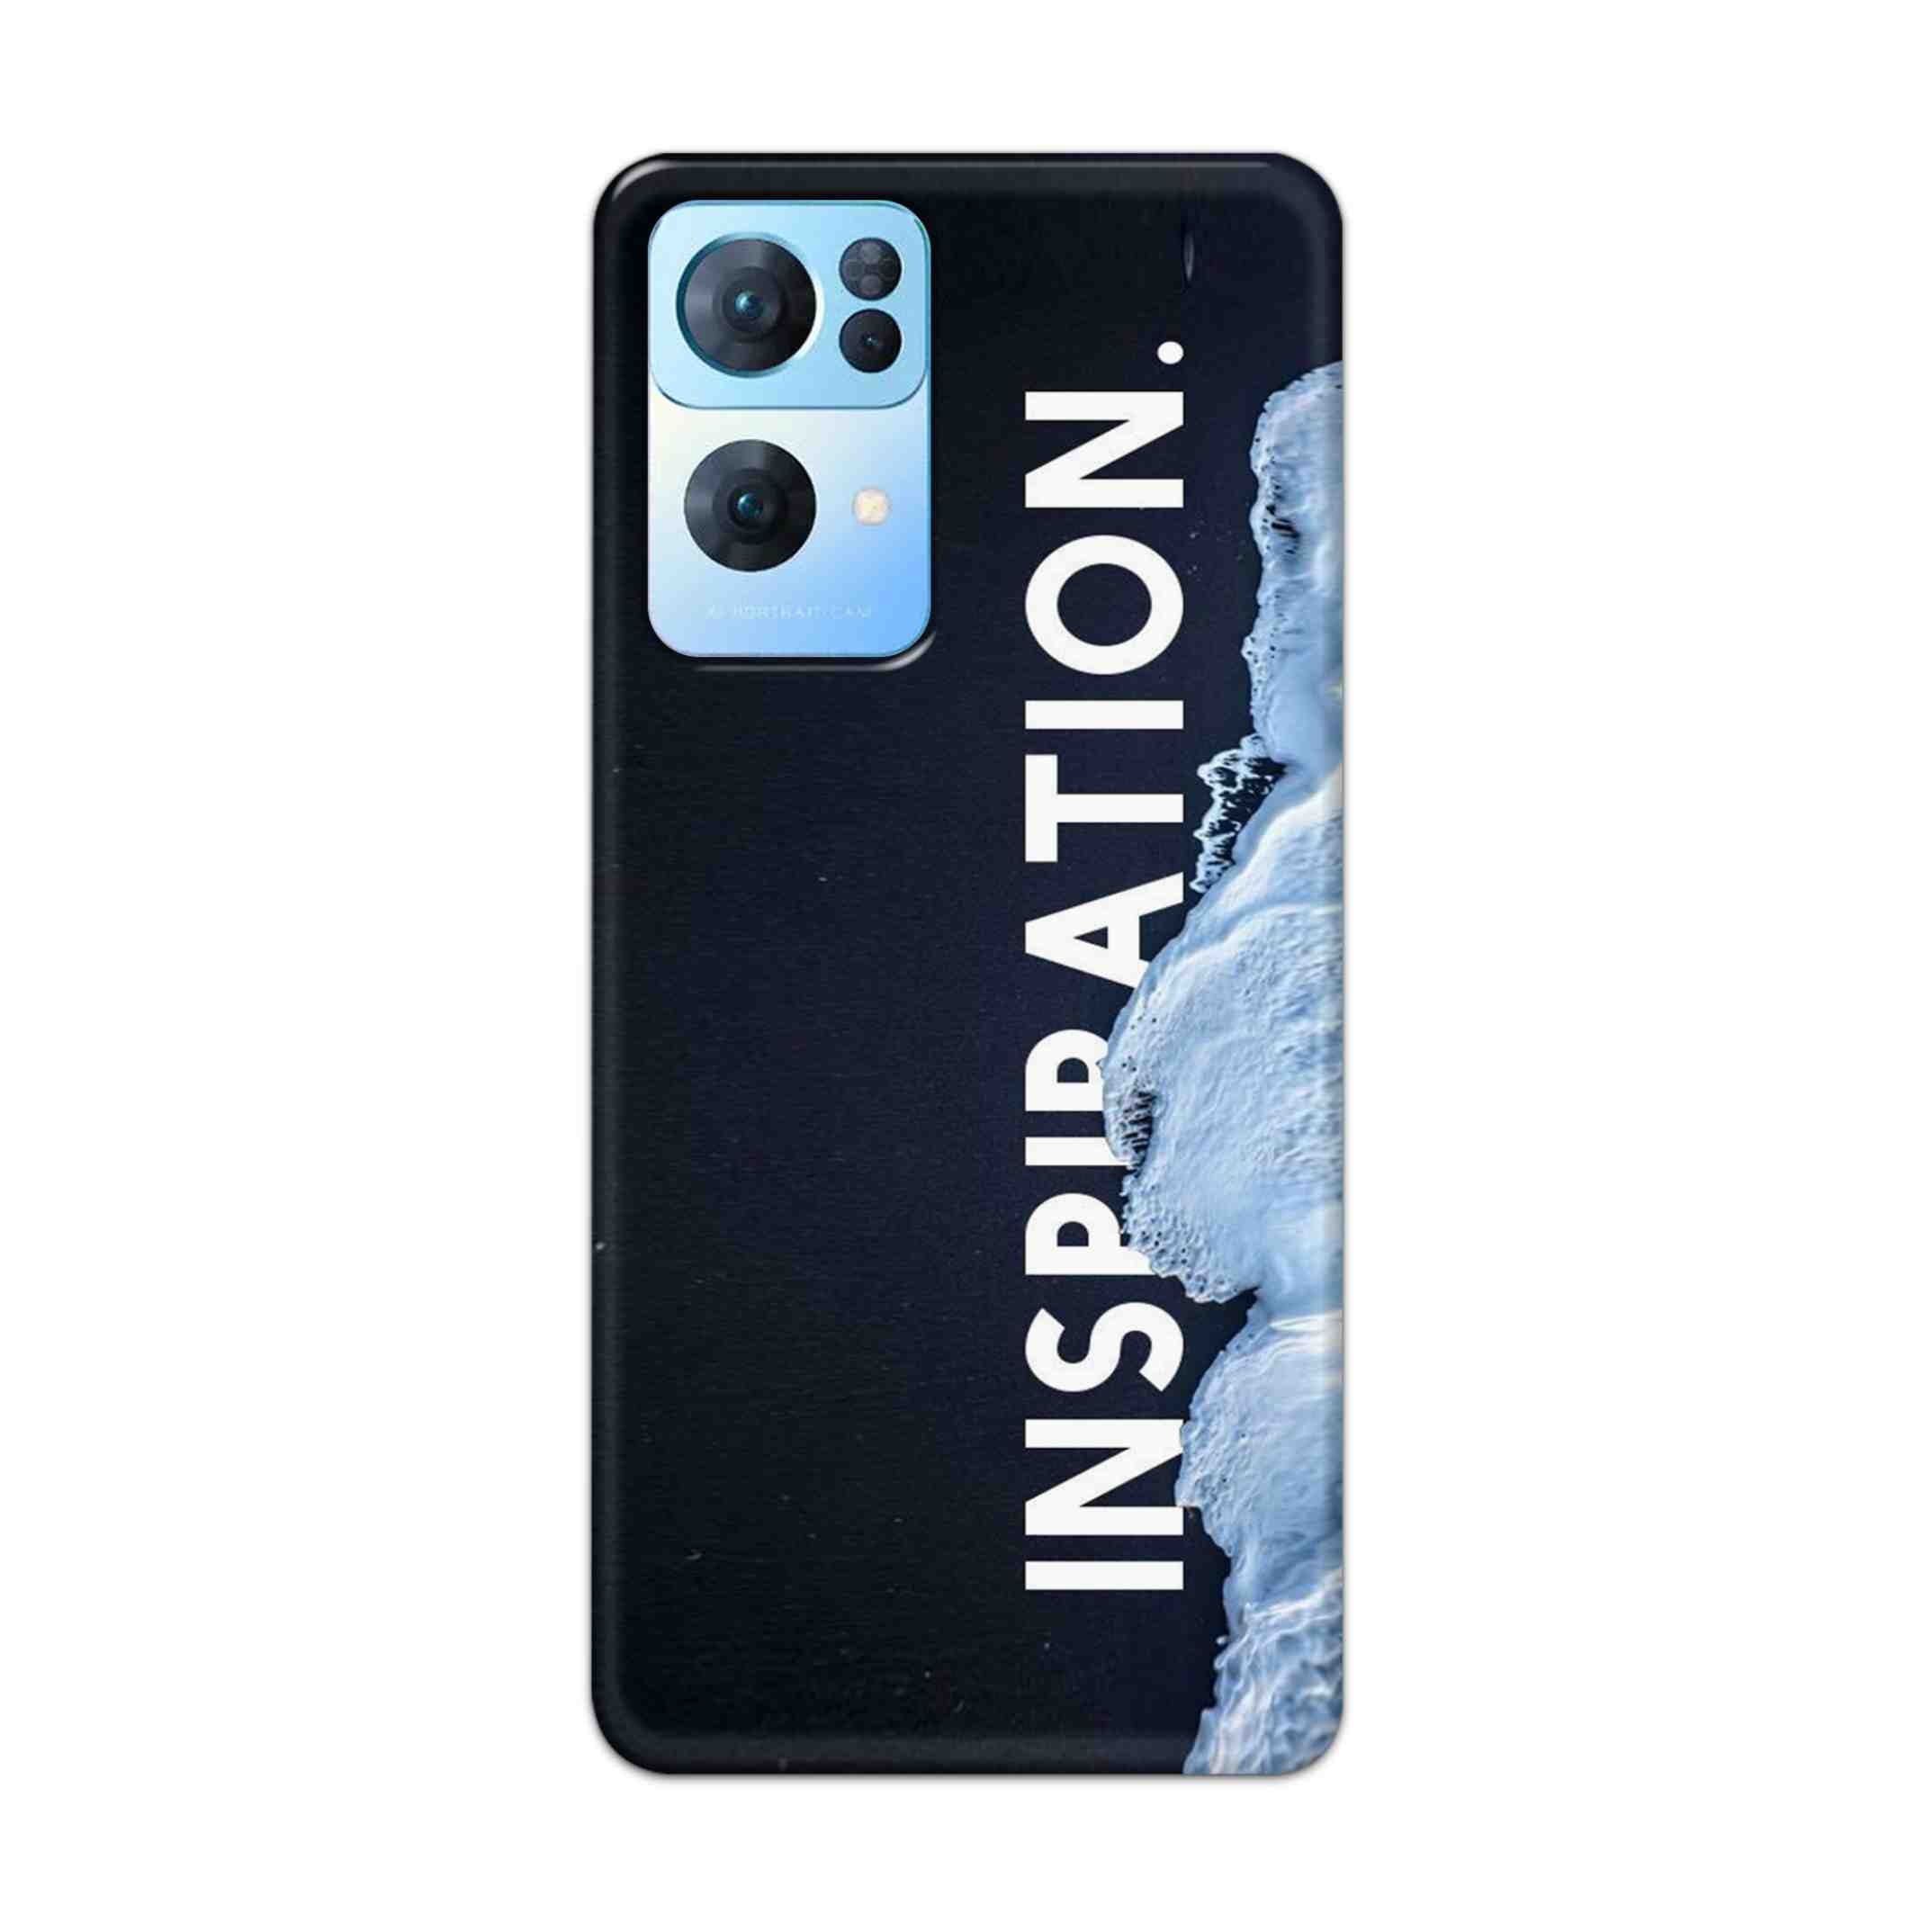 Buy Inspiration Hard Back Mobile Phone Case Cover For Oppo Reno 7 Pro Online